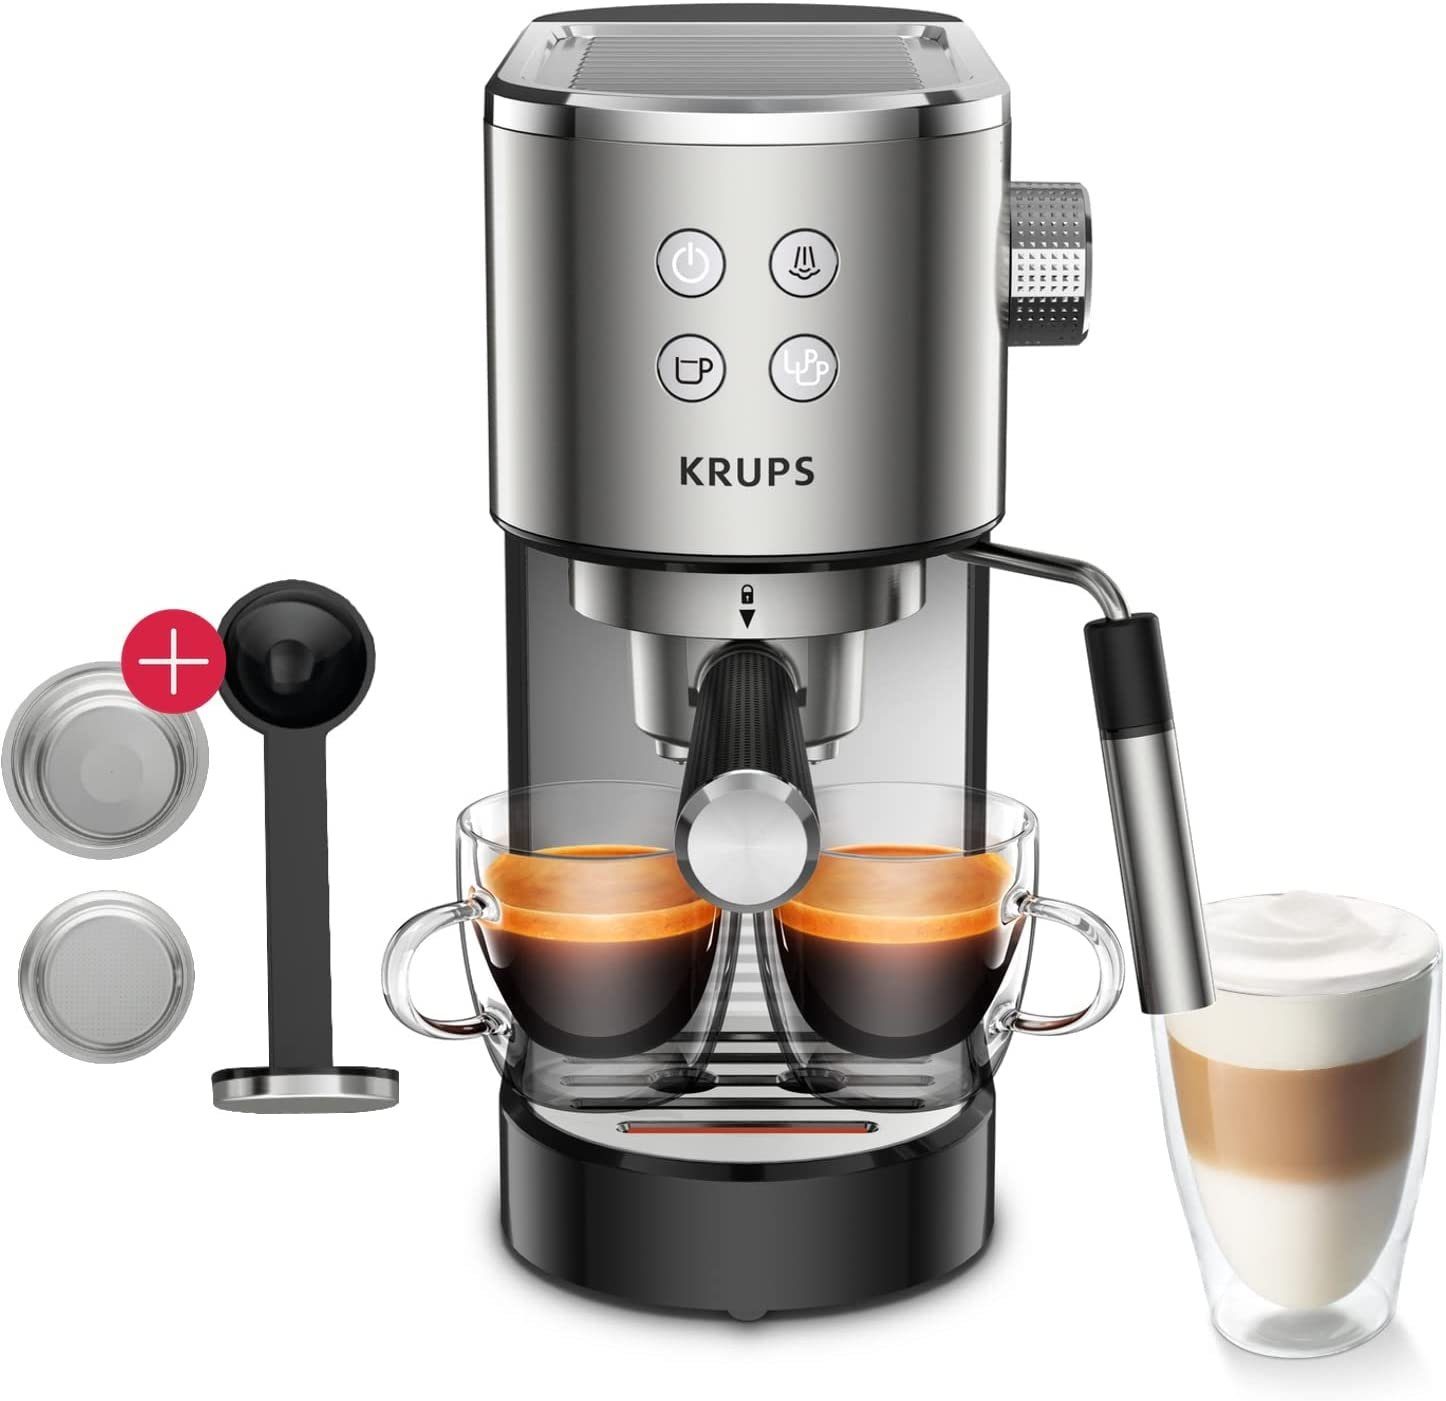 Krups Espressomaschine XP442C, 1l Kaffeekanne, Filtereinsatz automatischer Abschaltung, ESE Kaffeepads geeignet Edelstahl, 15 Bar + Tamper, Milchschaumdüse